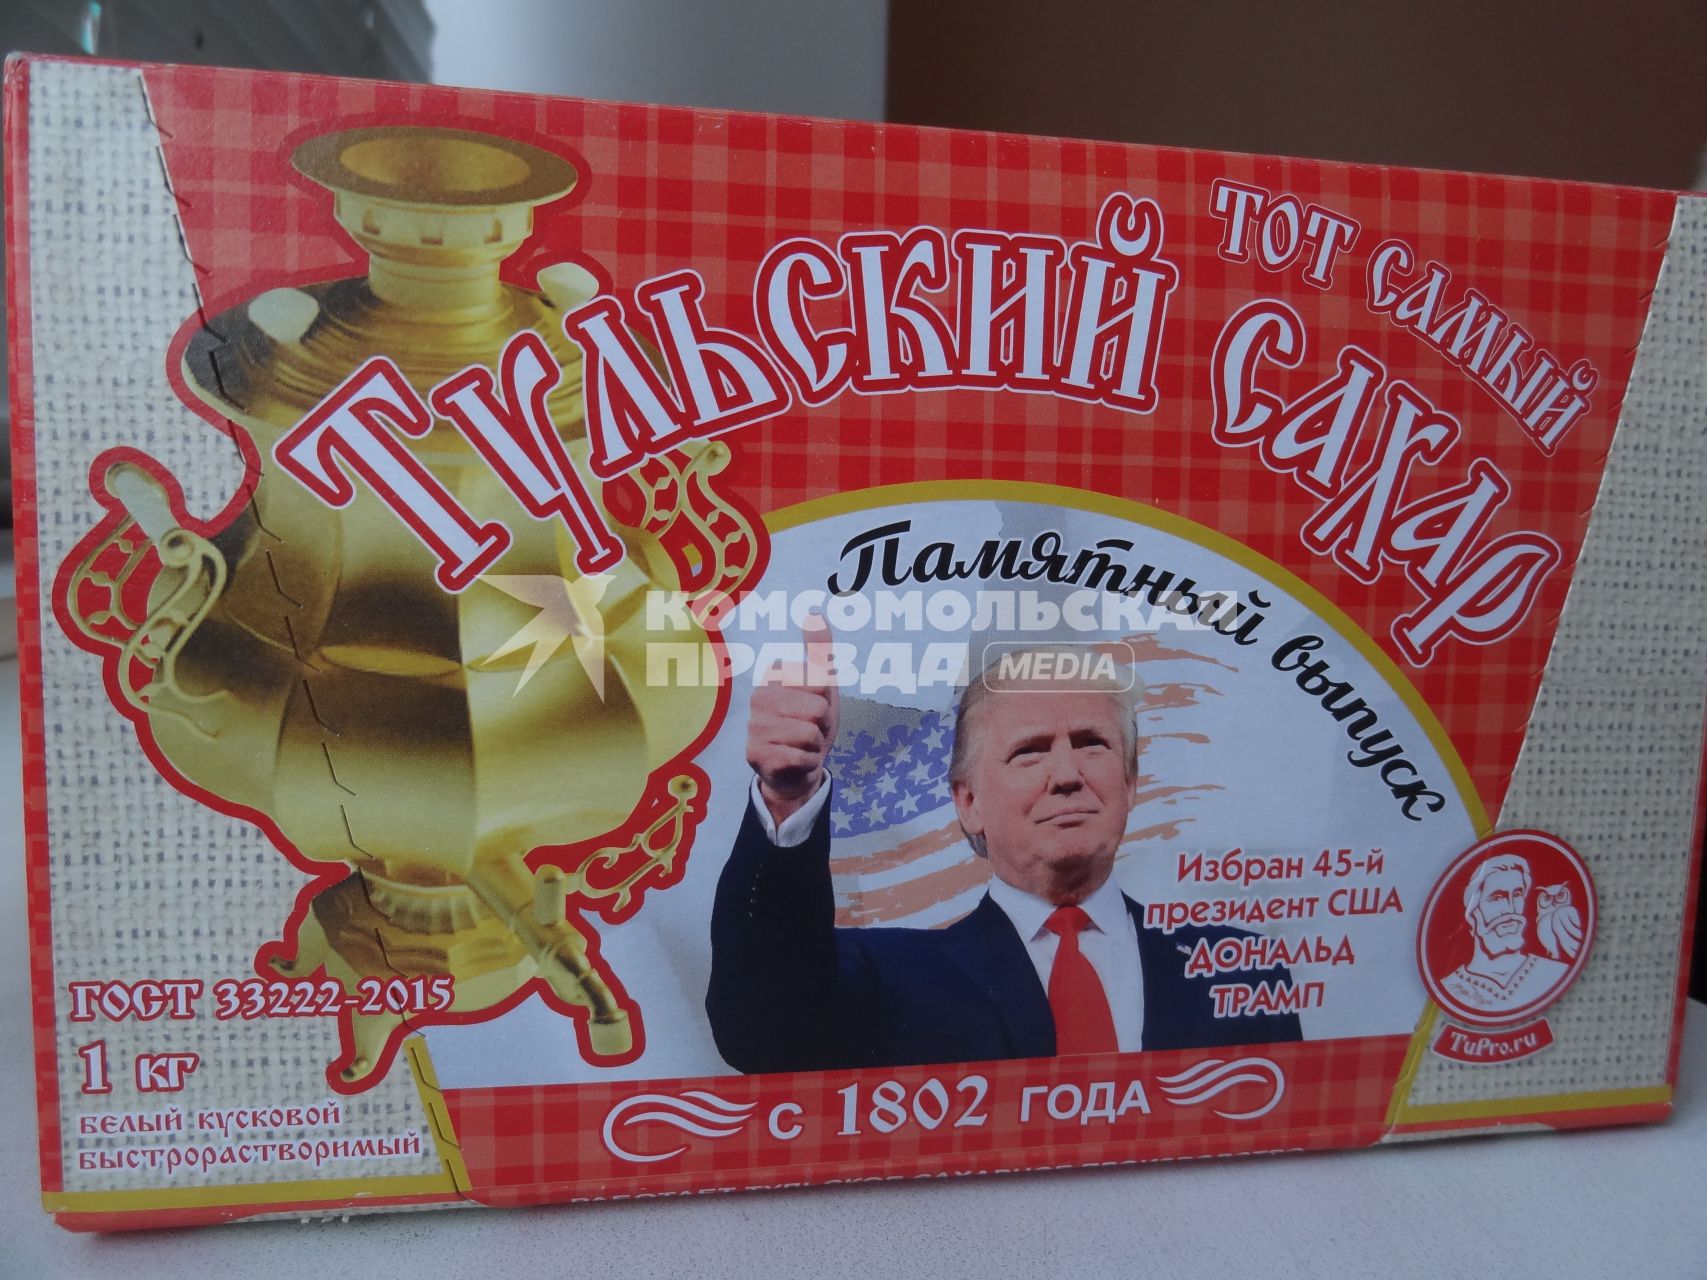 Тула. Изображение президента США Дональда Трампа на упаковке сахара.